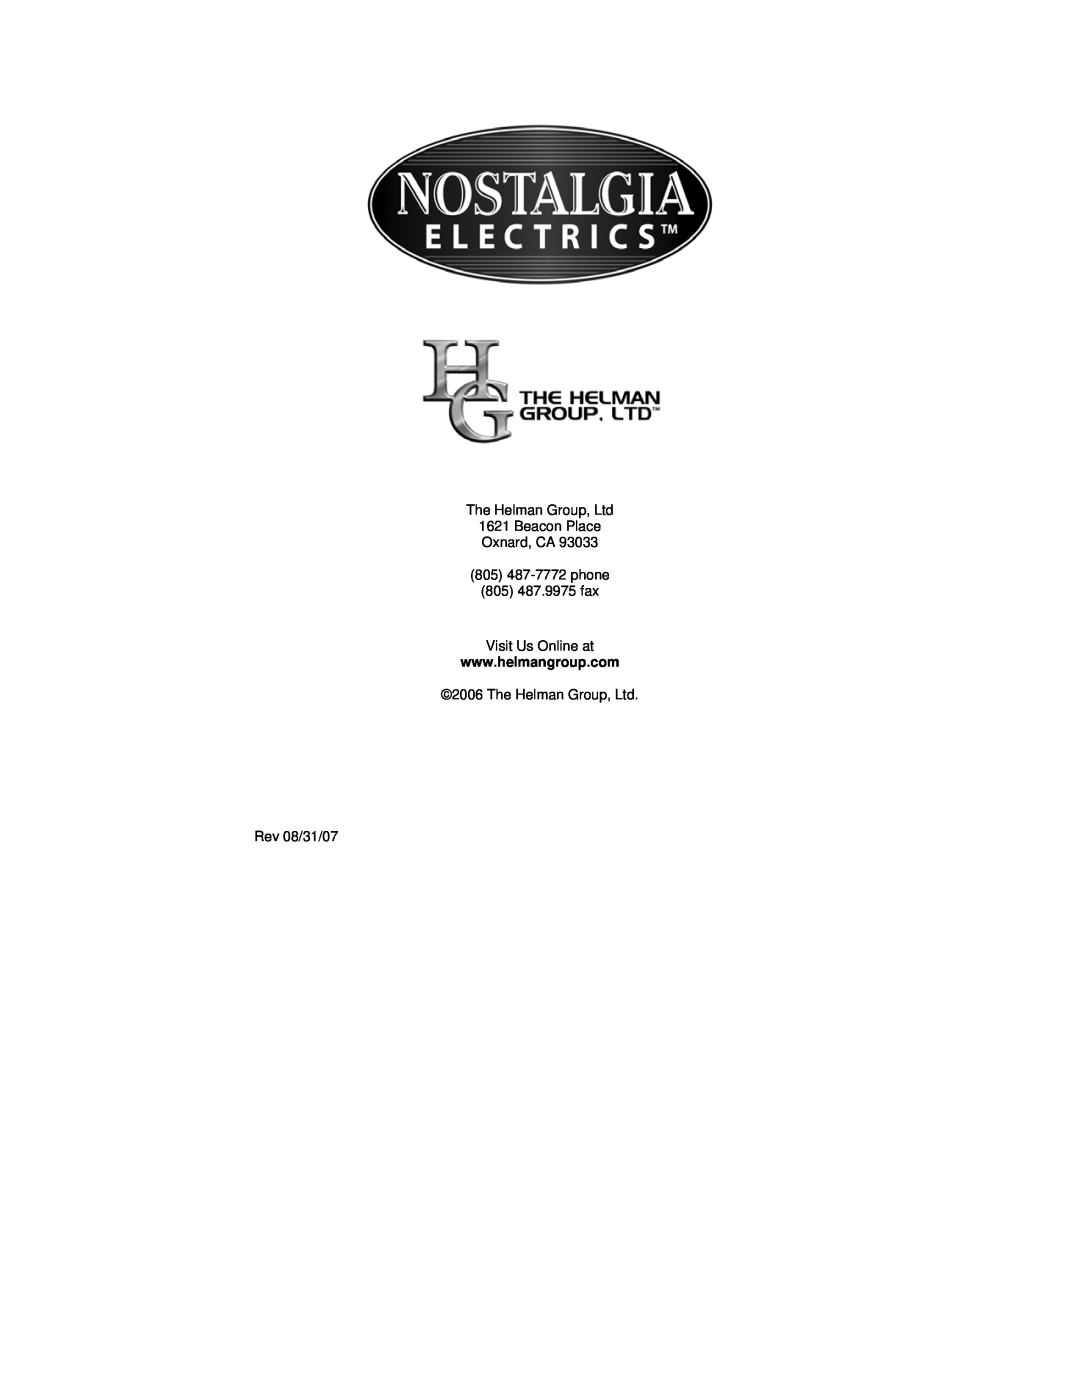 Nostalgia Electrics CFF-552 manual Oxnard, CA 805 487-7772phone 805 487.9975 fax, Visit Us Online at 